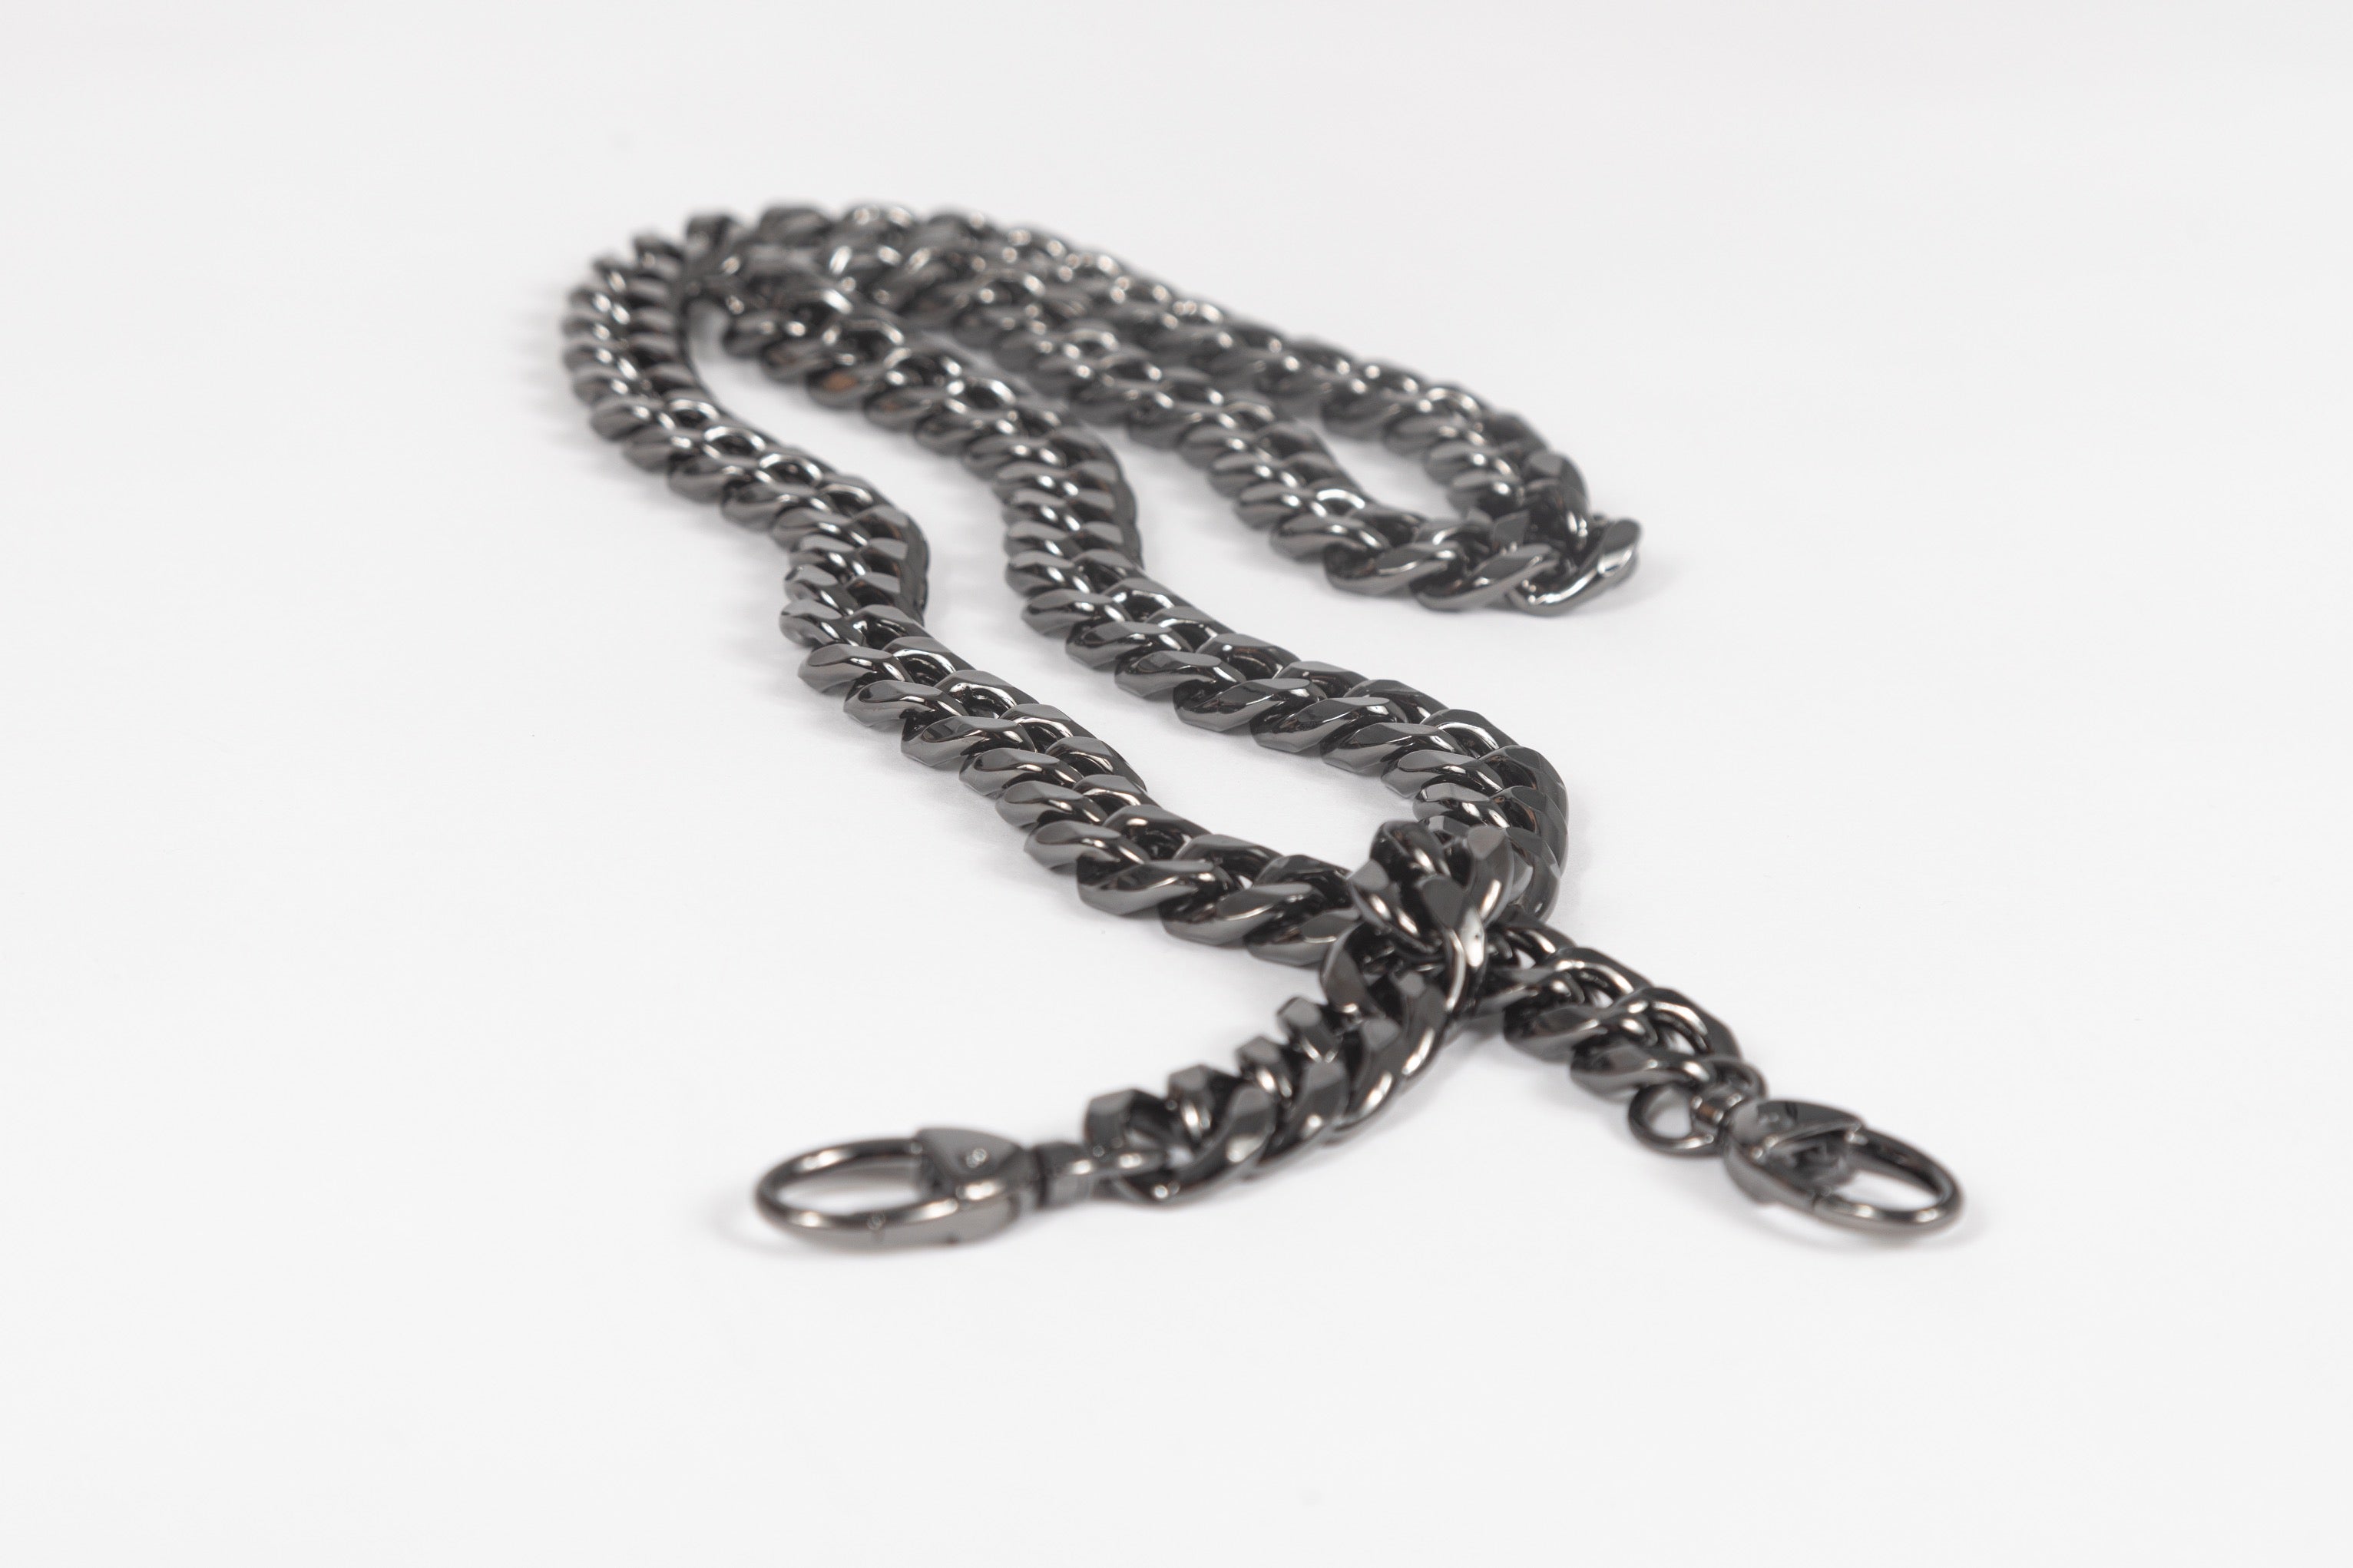 Thick Classy Curb Chain - Luxury Gunmetal/Black Chain Strap for